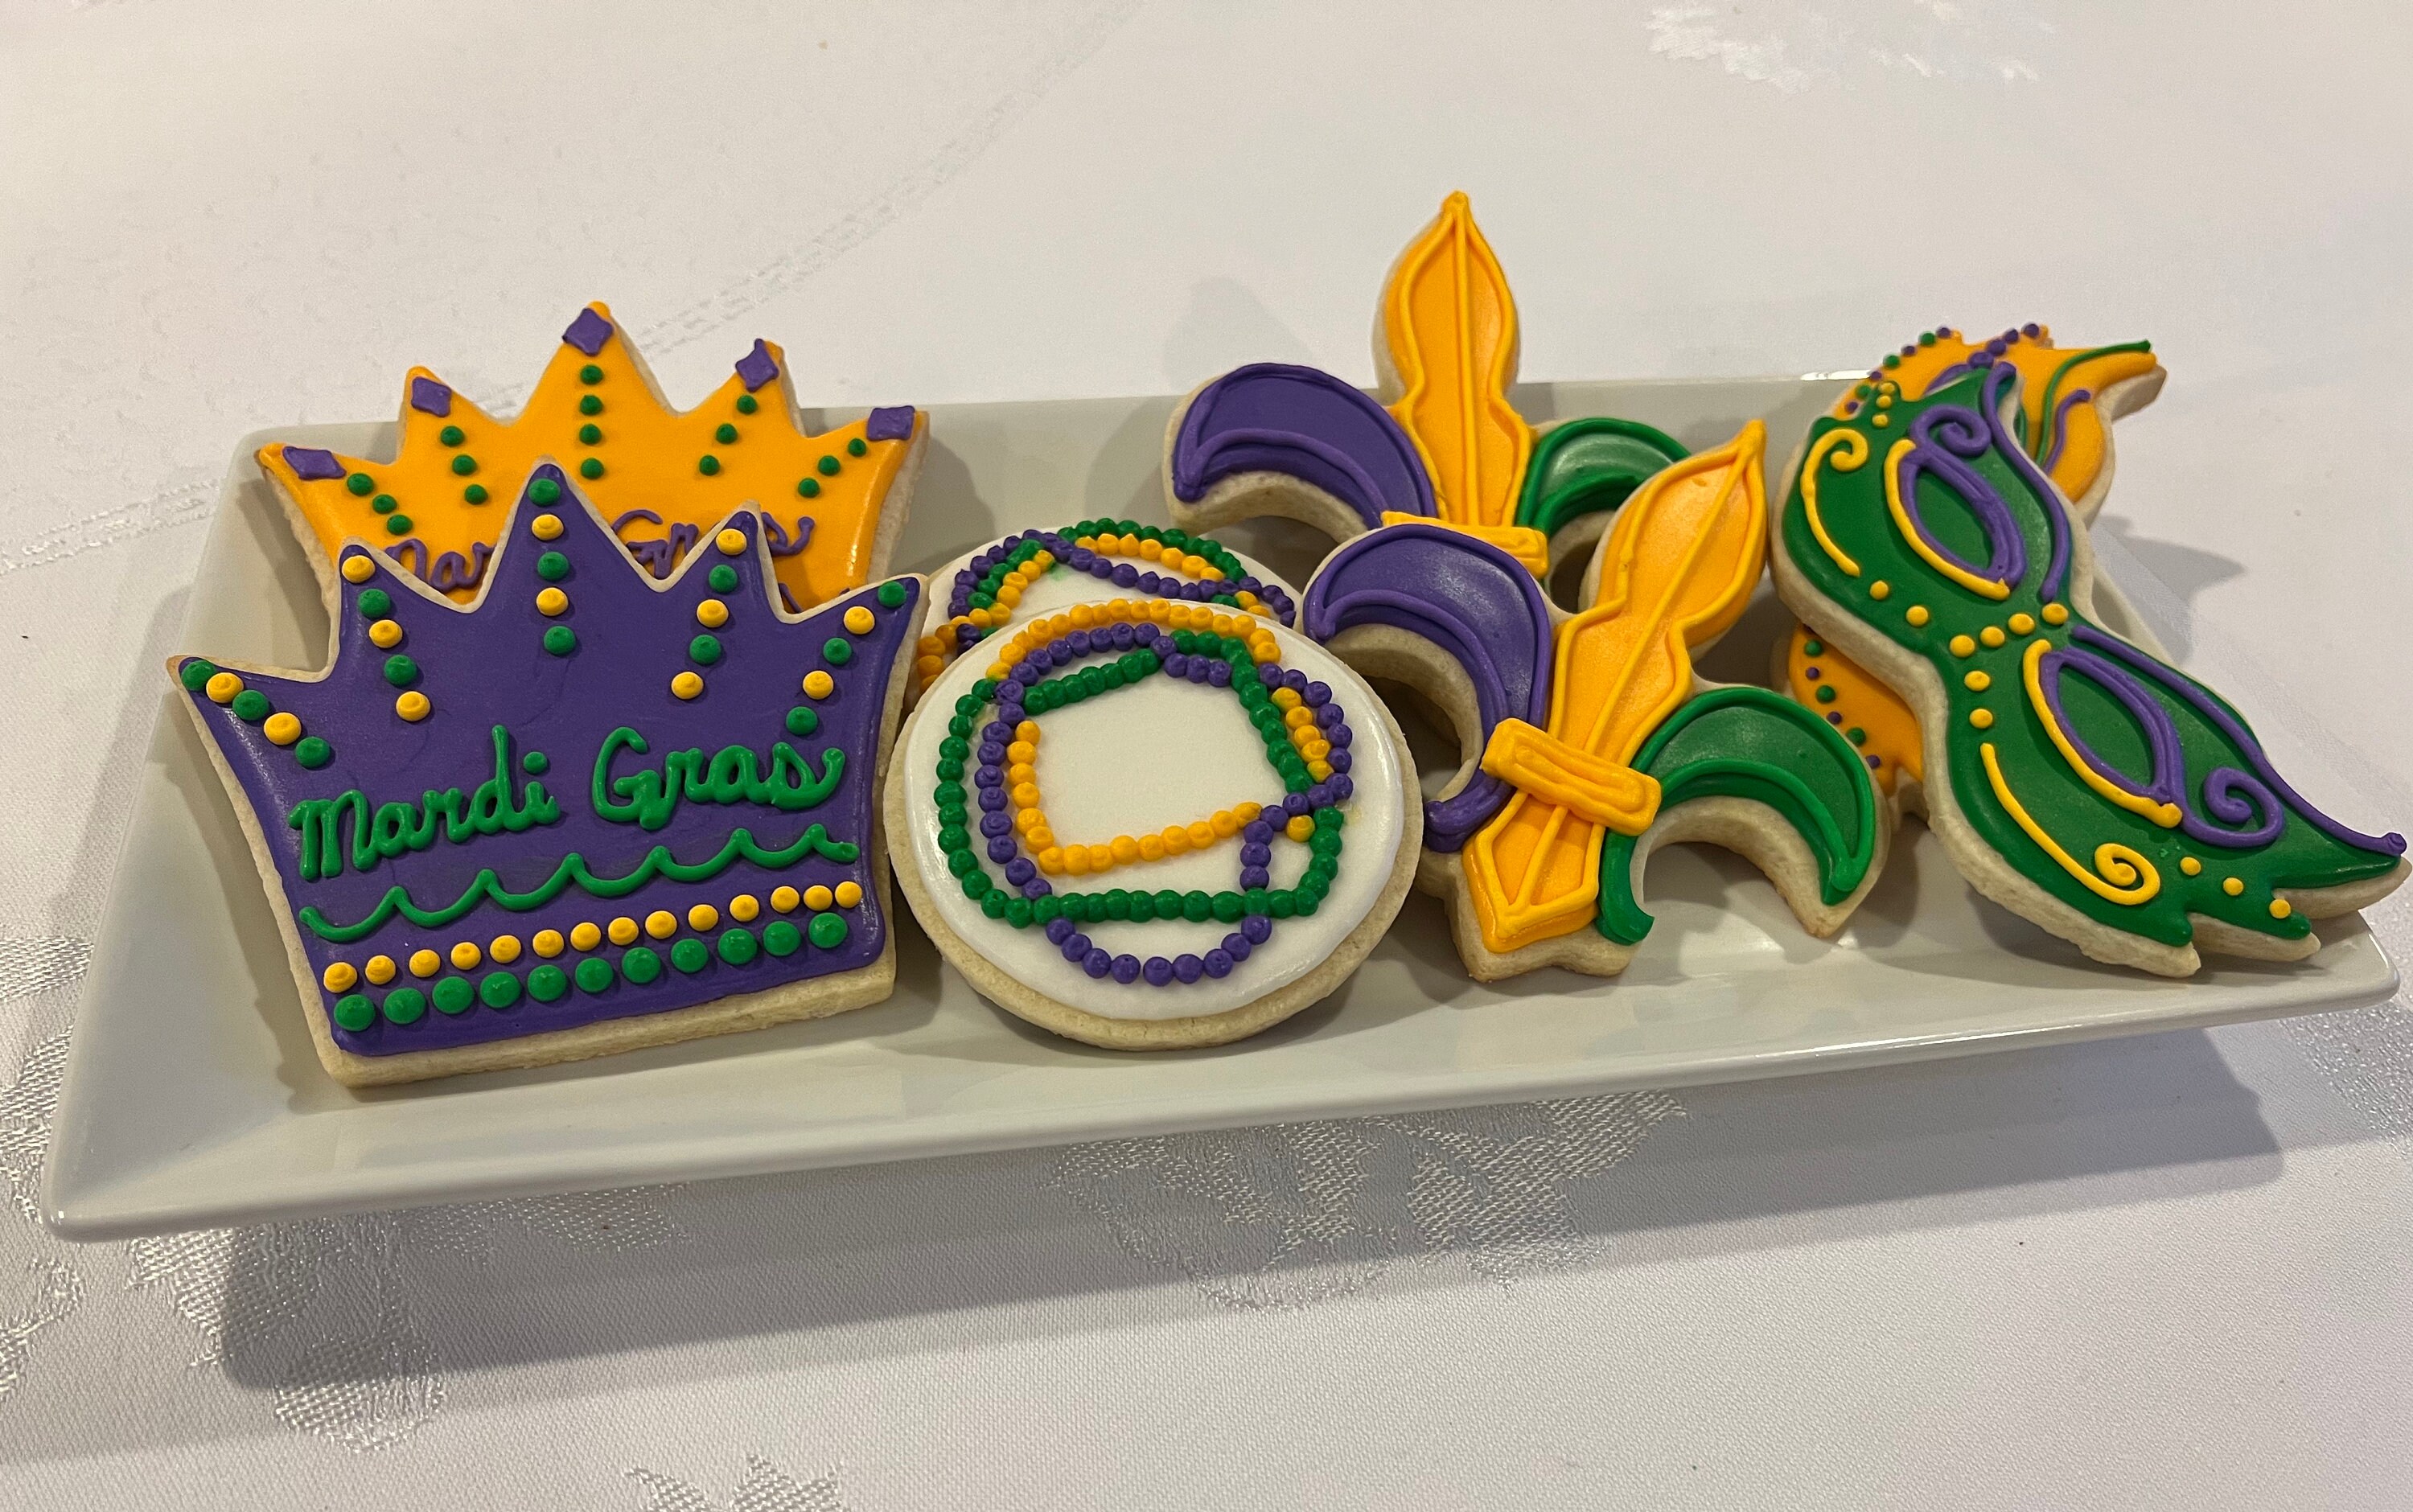  Mardi Gras/New Orleans Cookie Cutter Set - King Crown